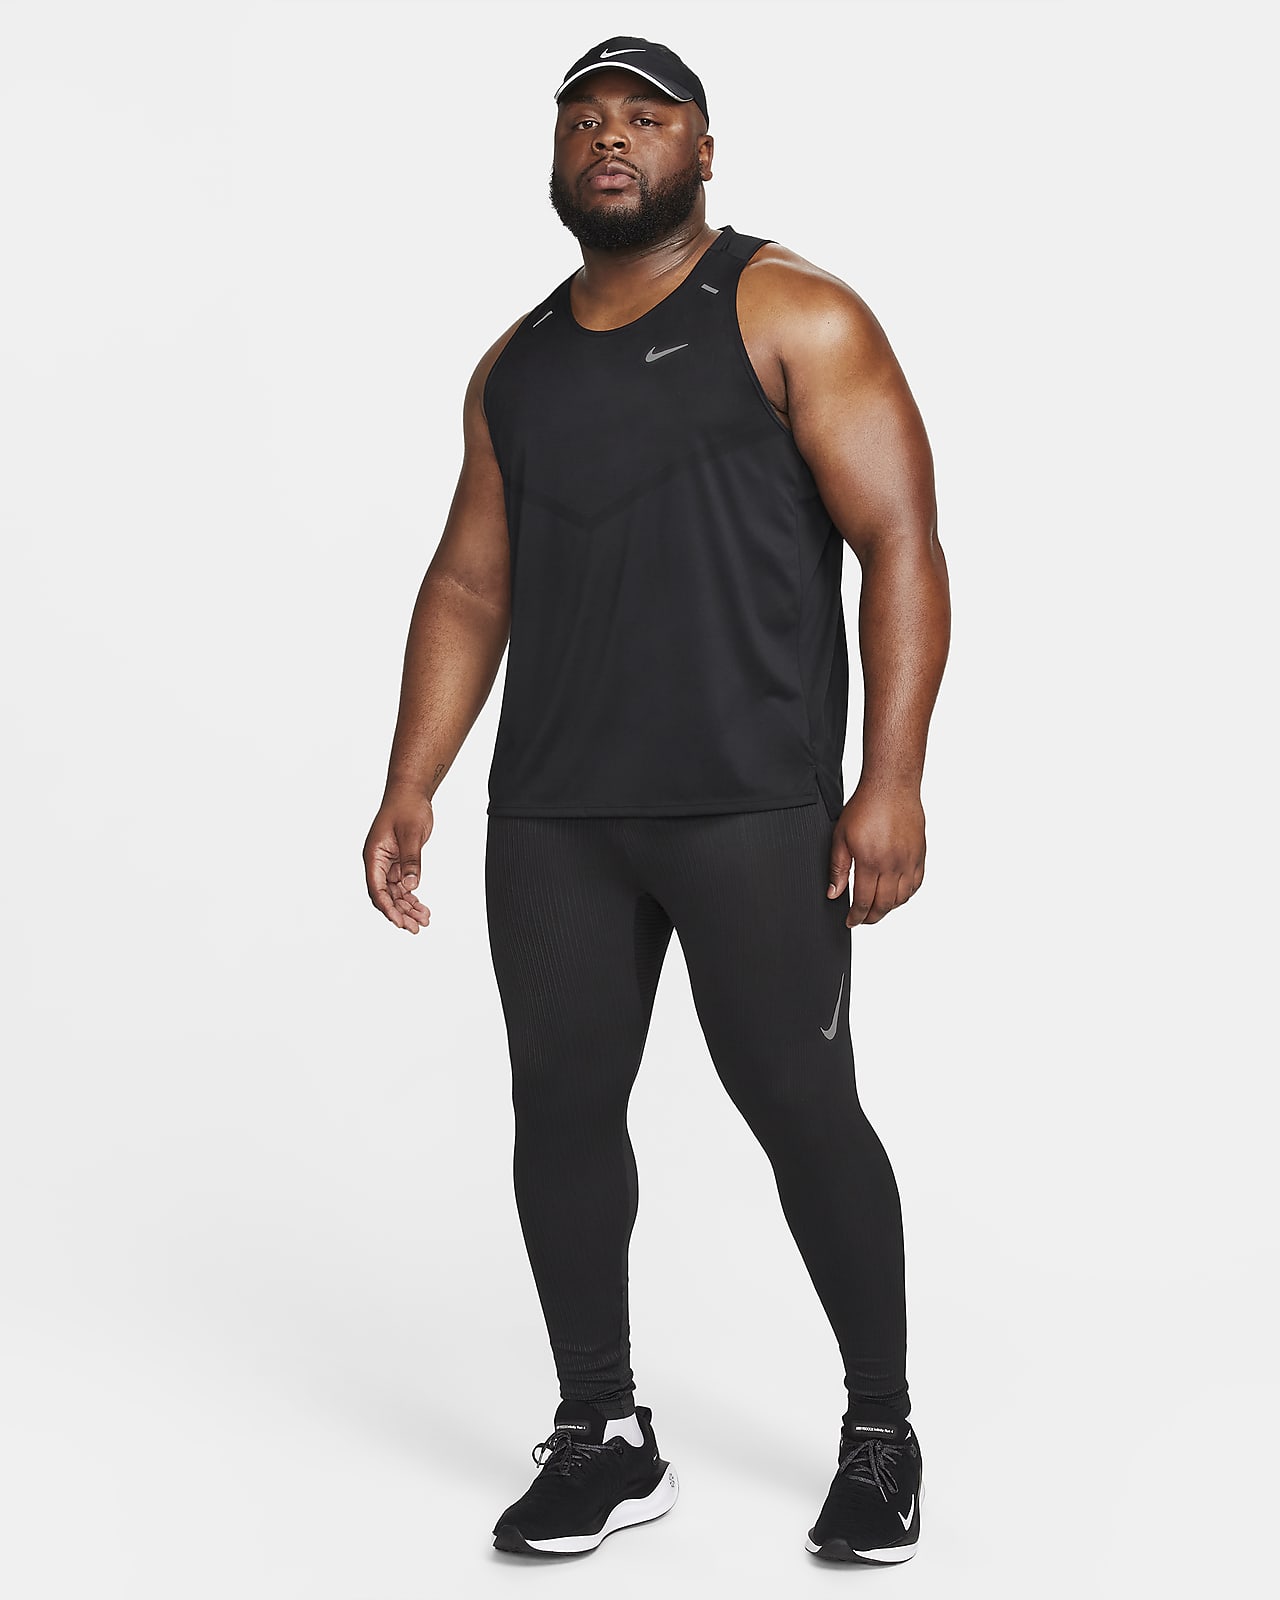 NWT Mens Nike Dri Fit Adv APS Recovery Training Tights Black Pants